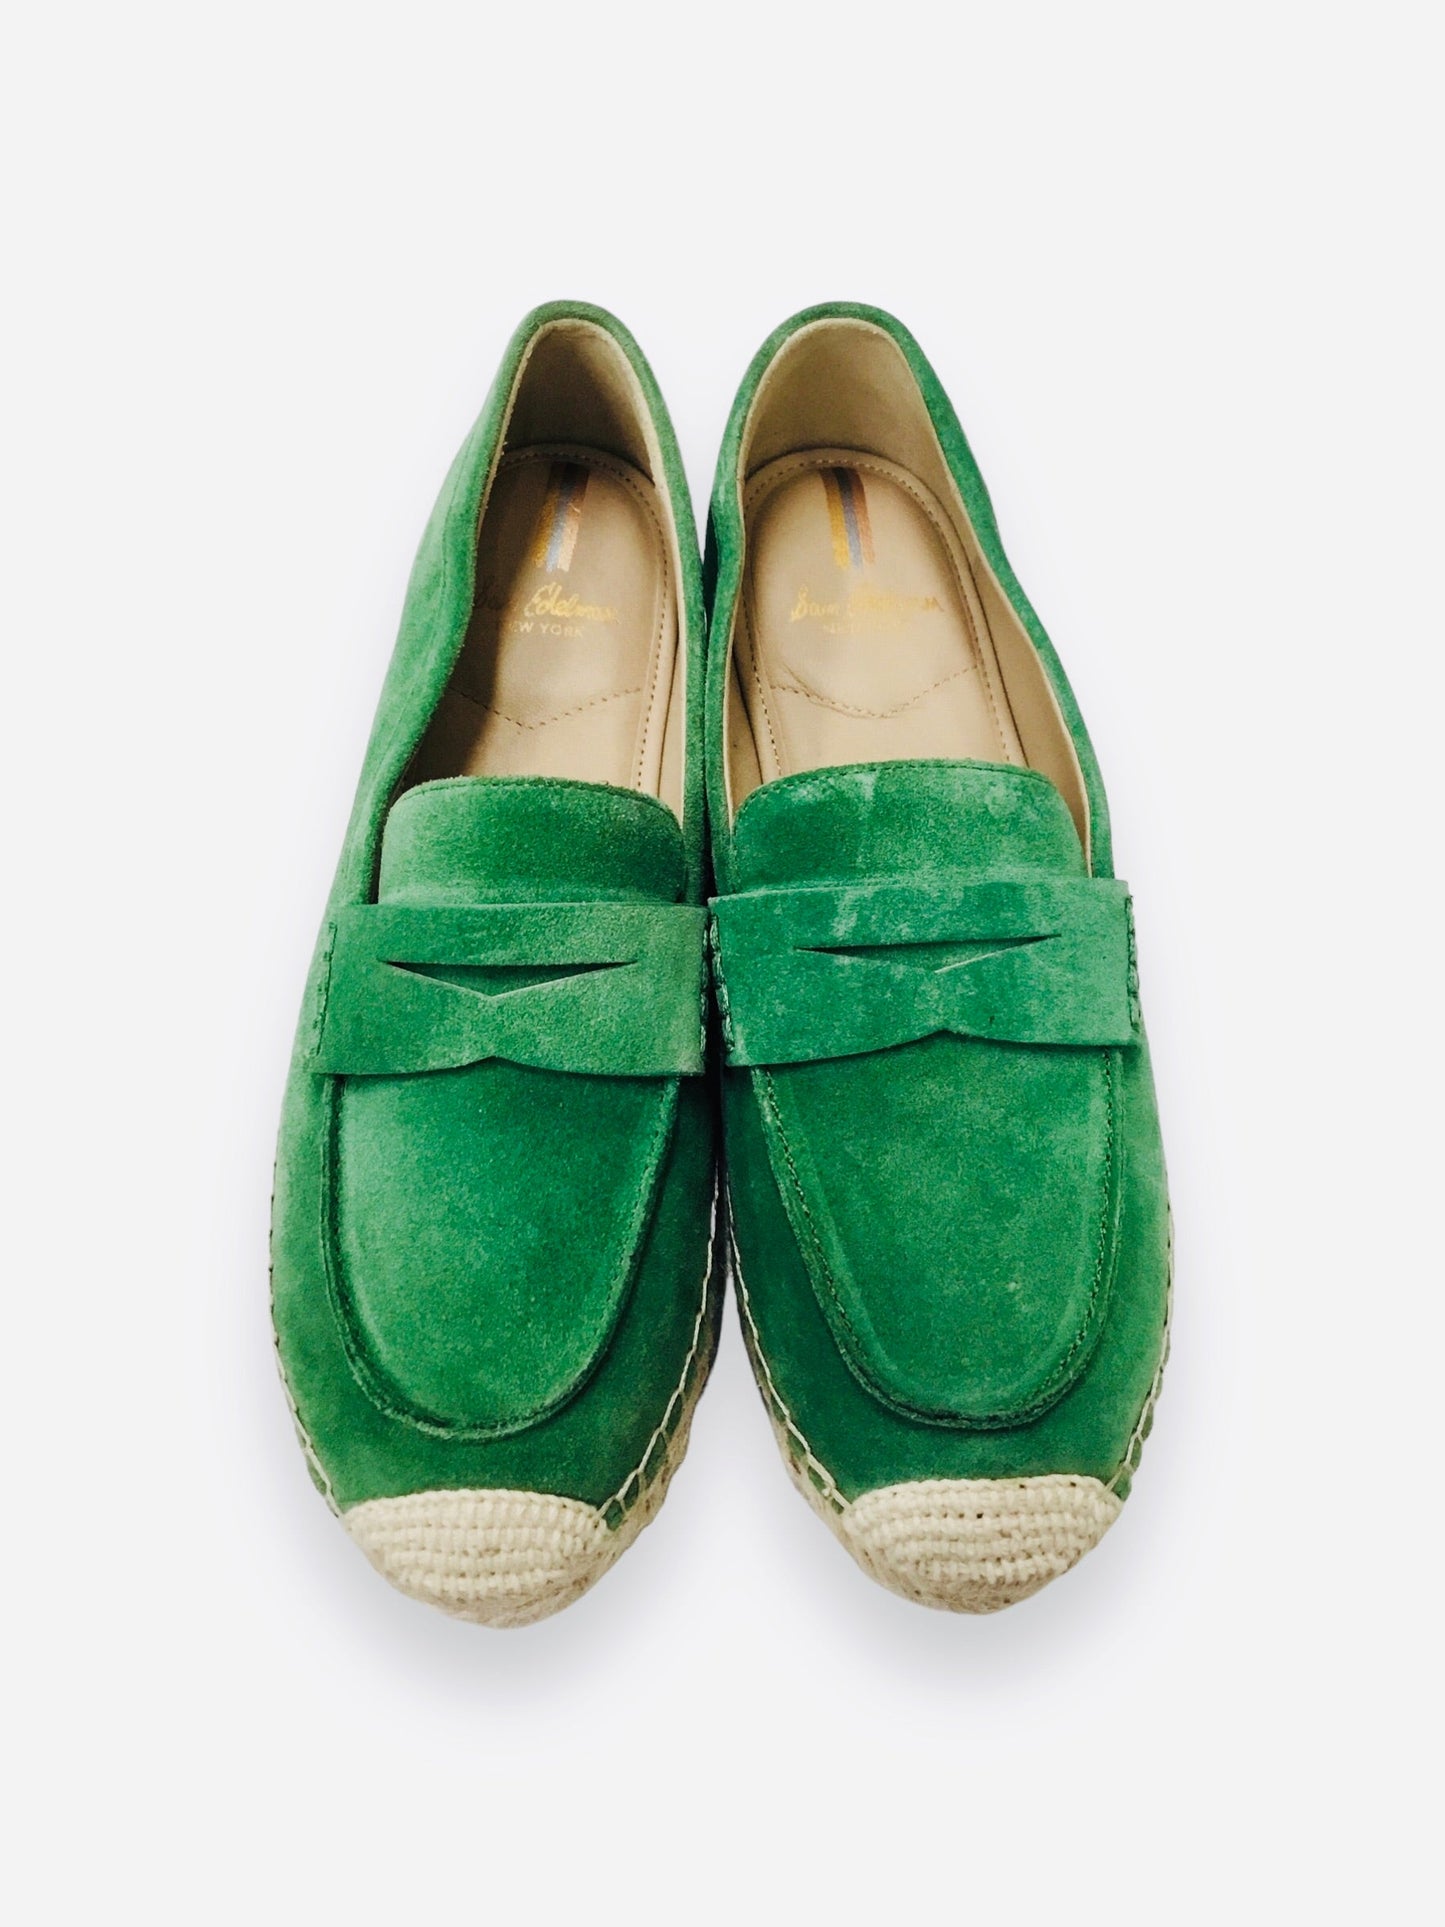 Green Shoes Flats Sam Edelman, Size 7